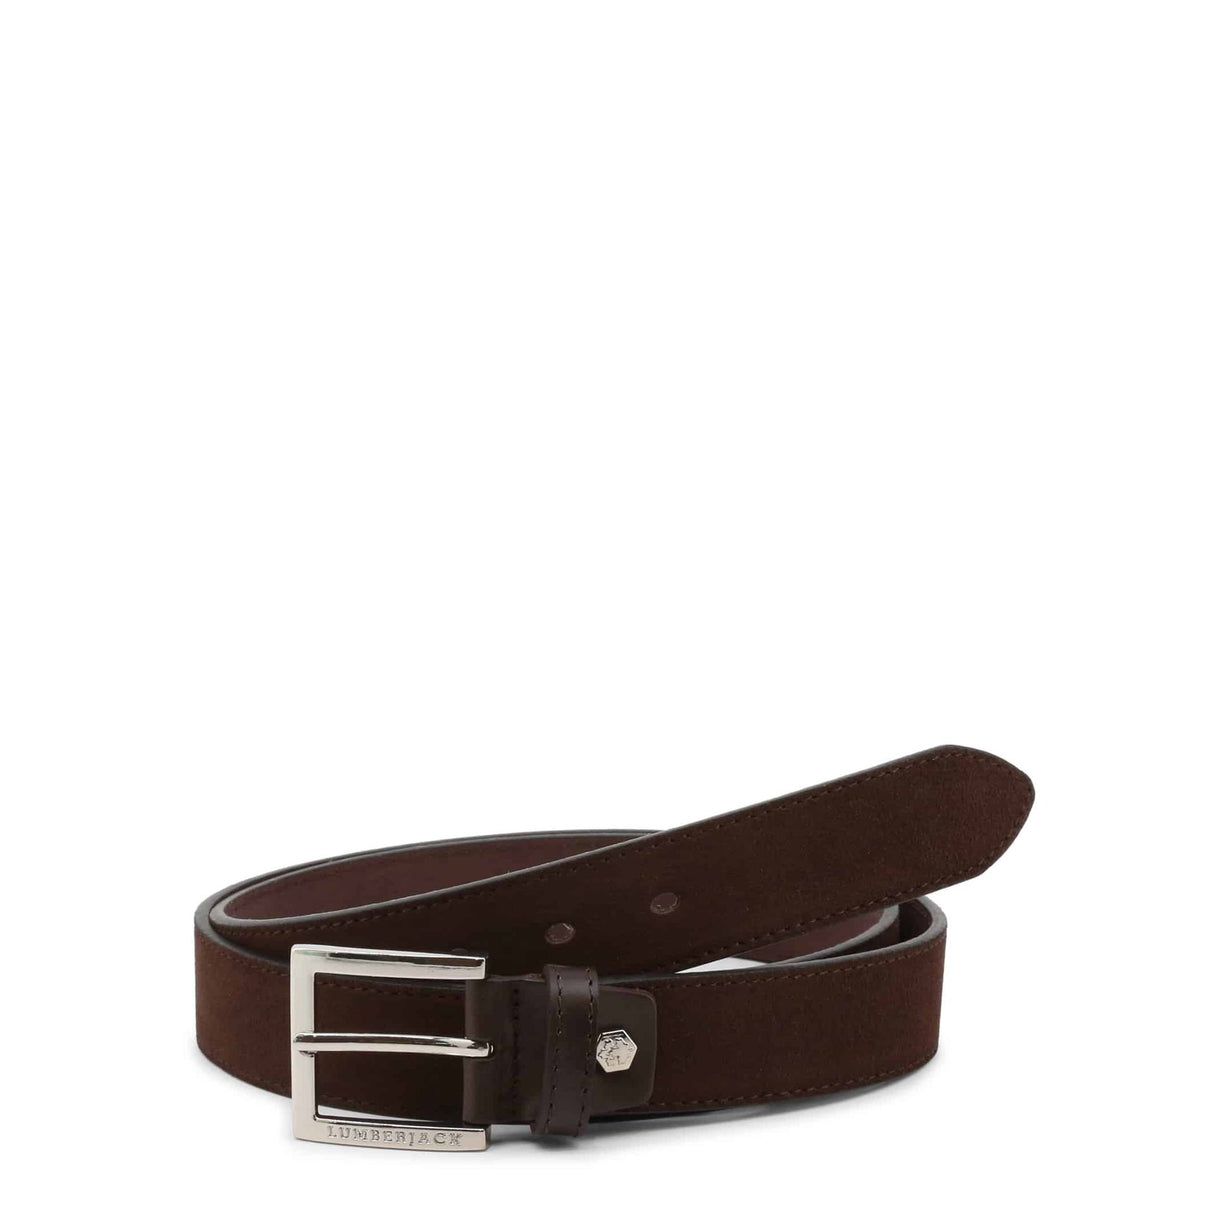 Lumberjack Belts Men's Belts Genuine Leather 3 cm Height Adjustable Closure Non-Reversible Everyday Accessory